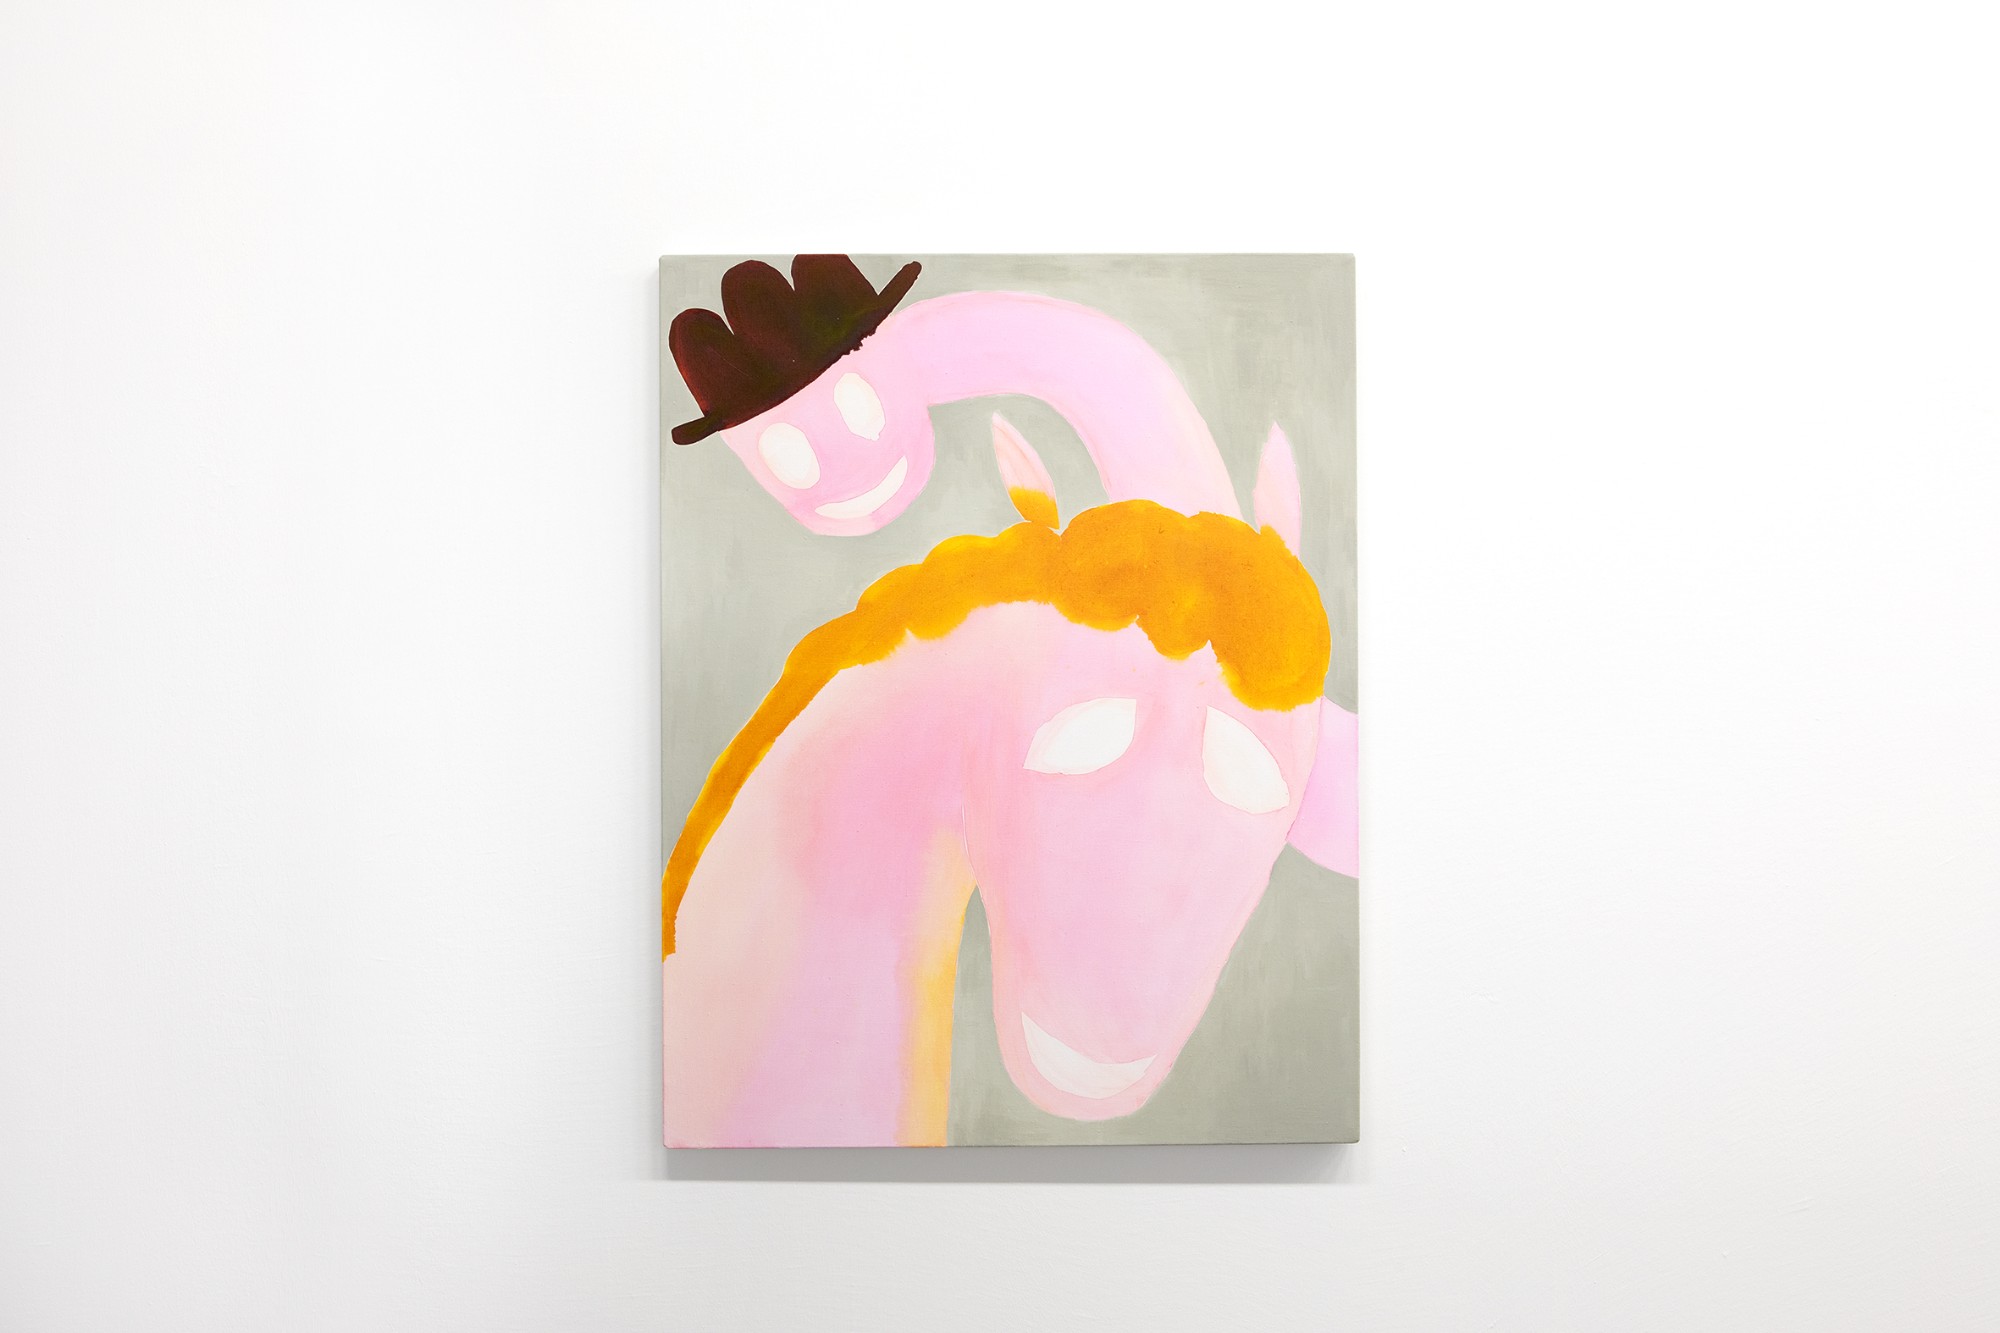 Sarah Bogner, Zwei graue Freunde, 2022, egg tempera, ink on canvas, 105 x 82 cm